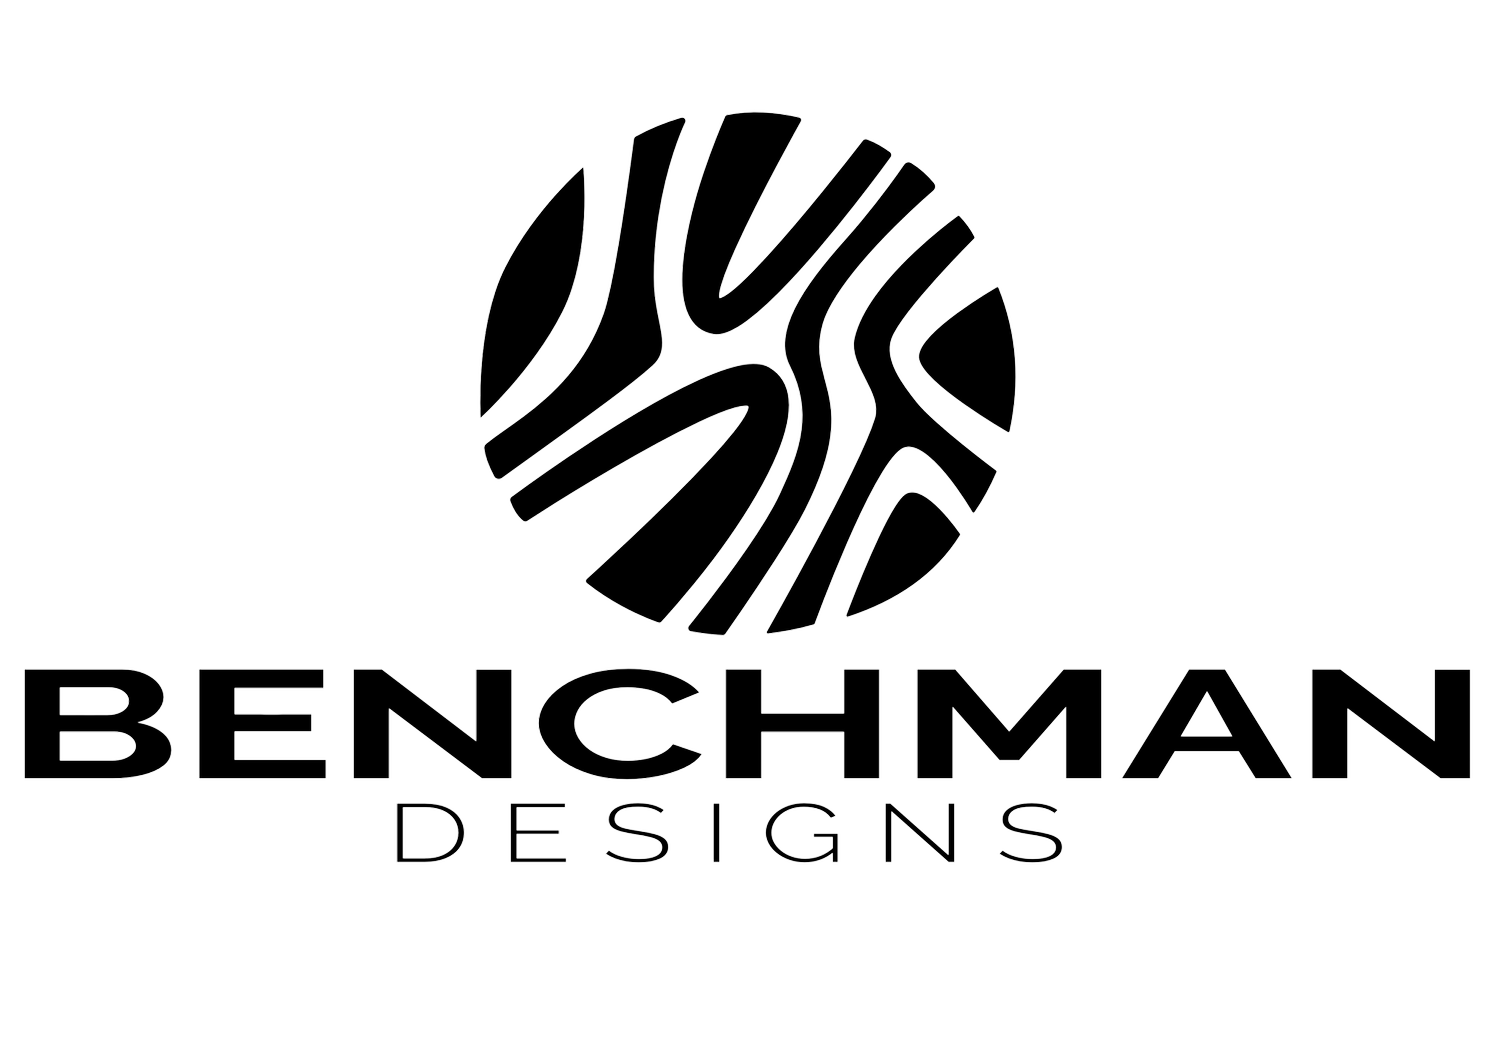 Benchman Designs